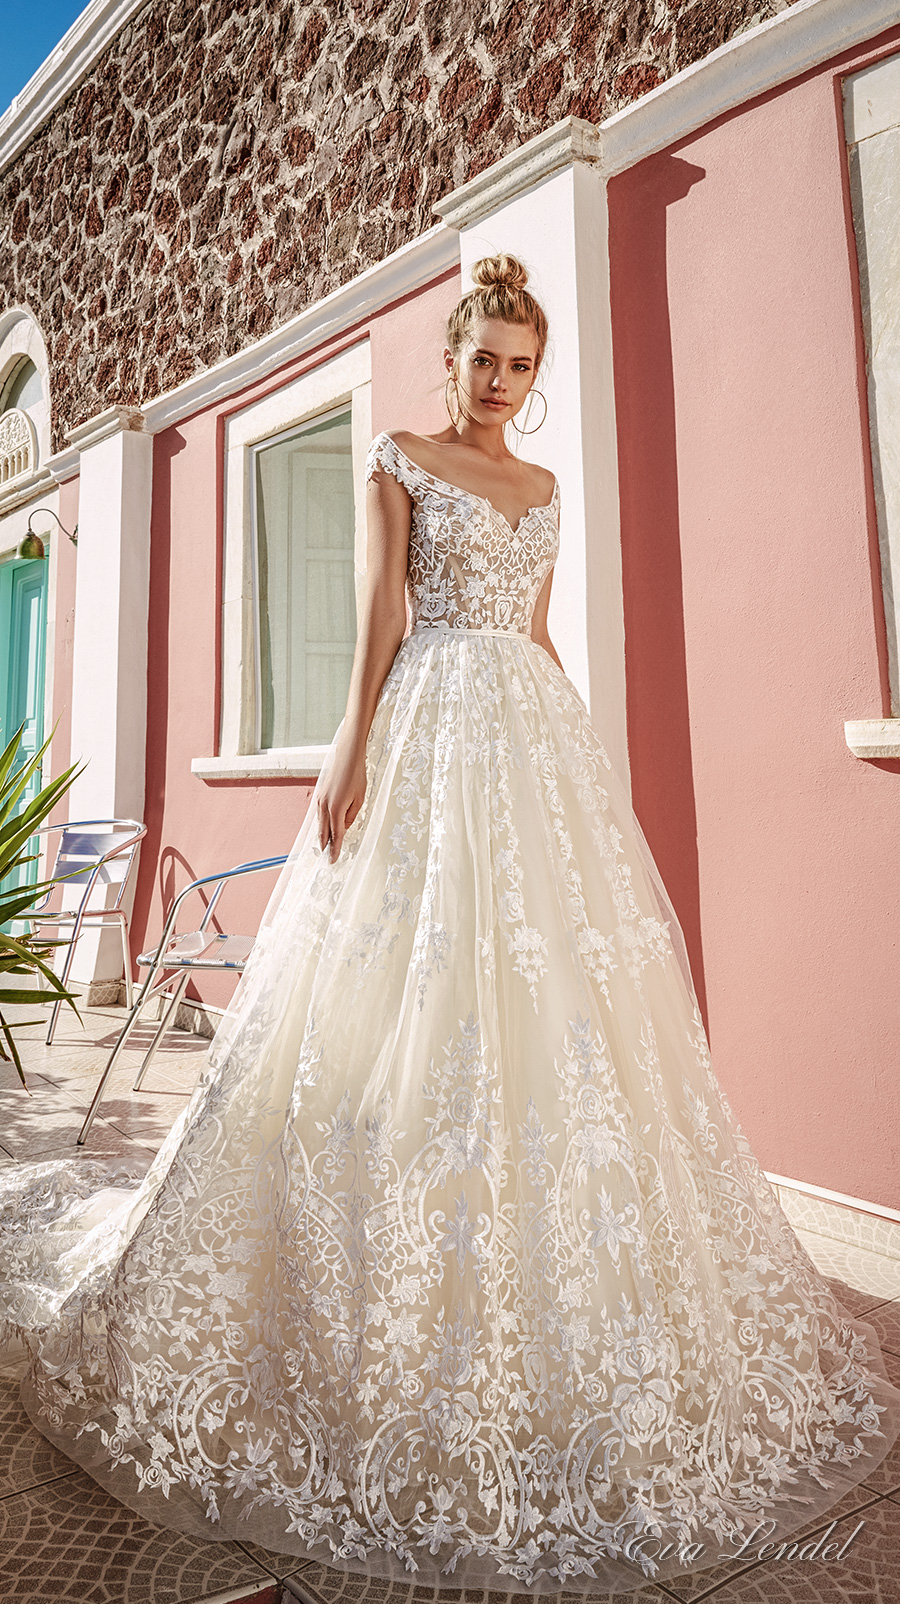 Eva Lendel 2017 Wedding Dresses — “Santorini” Bridal Campaign | Wedding